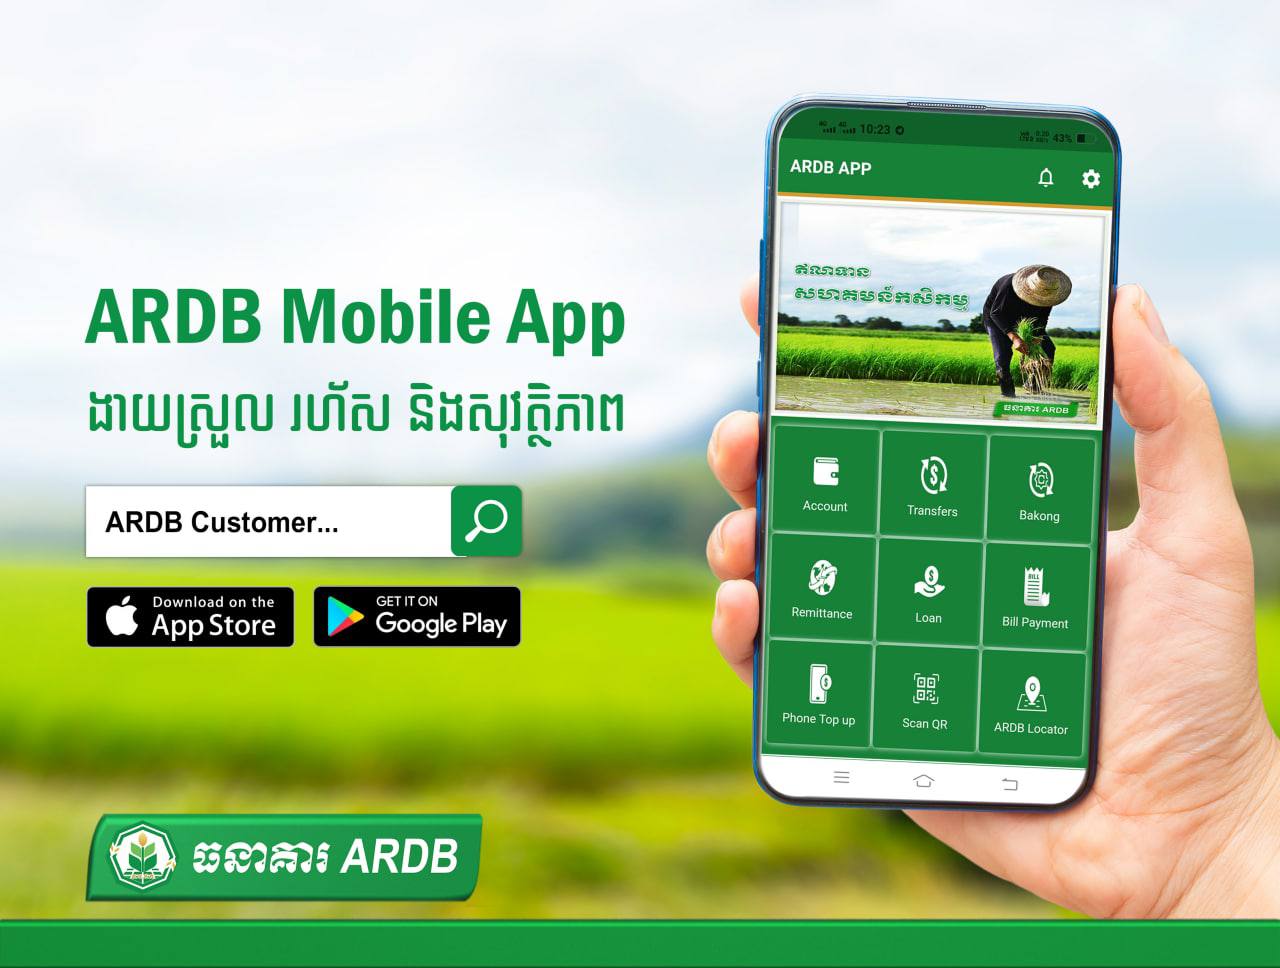 ARDB Mobile App